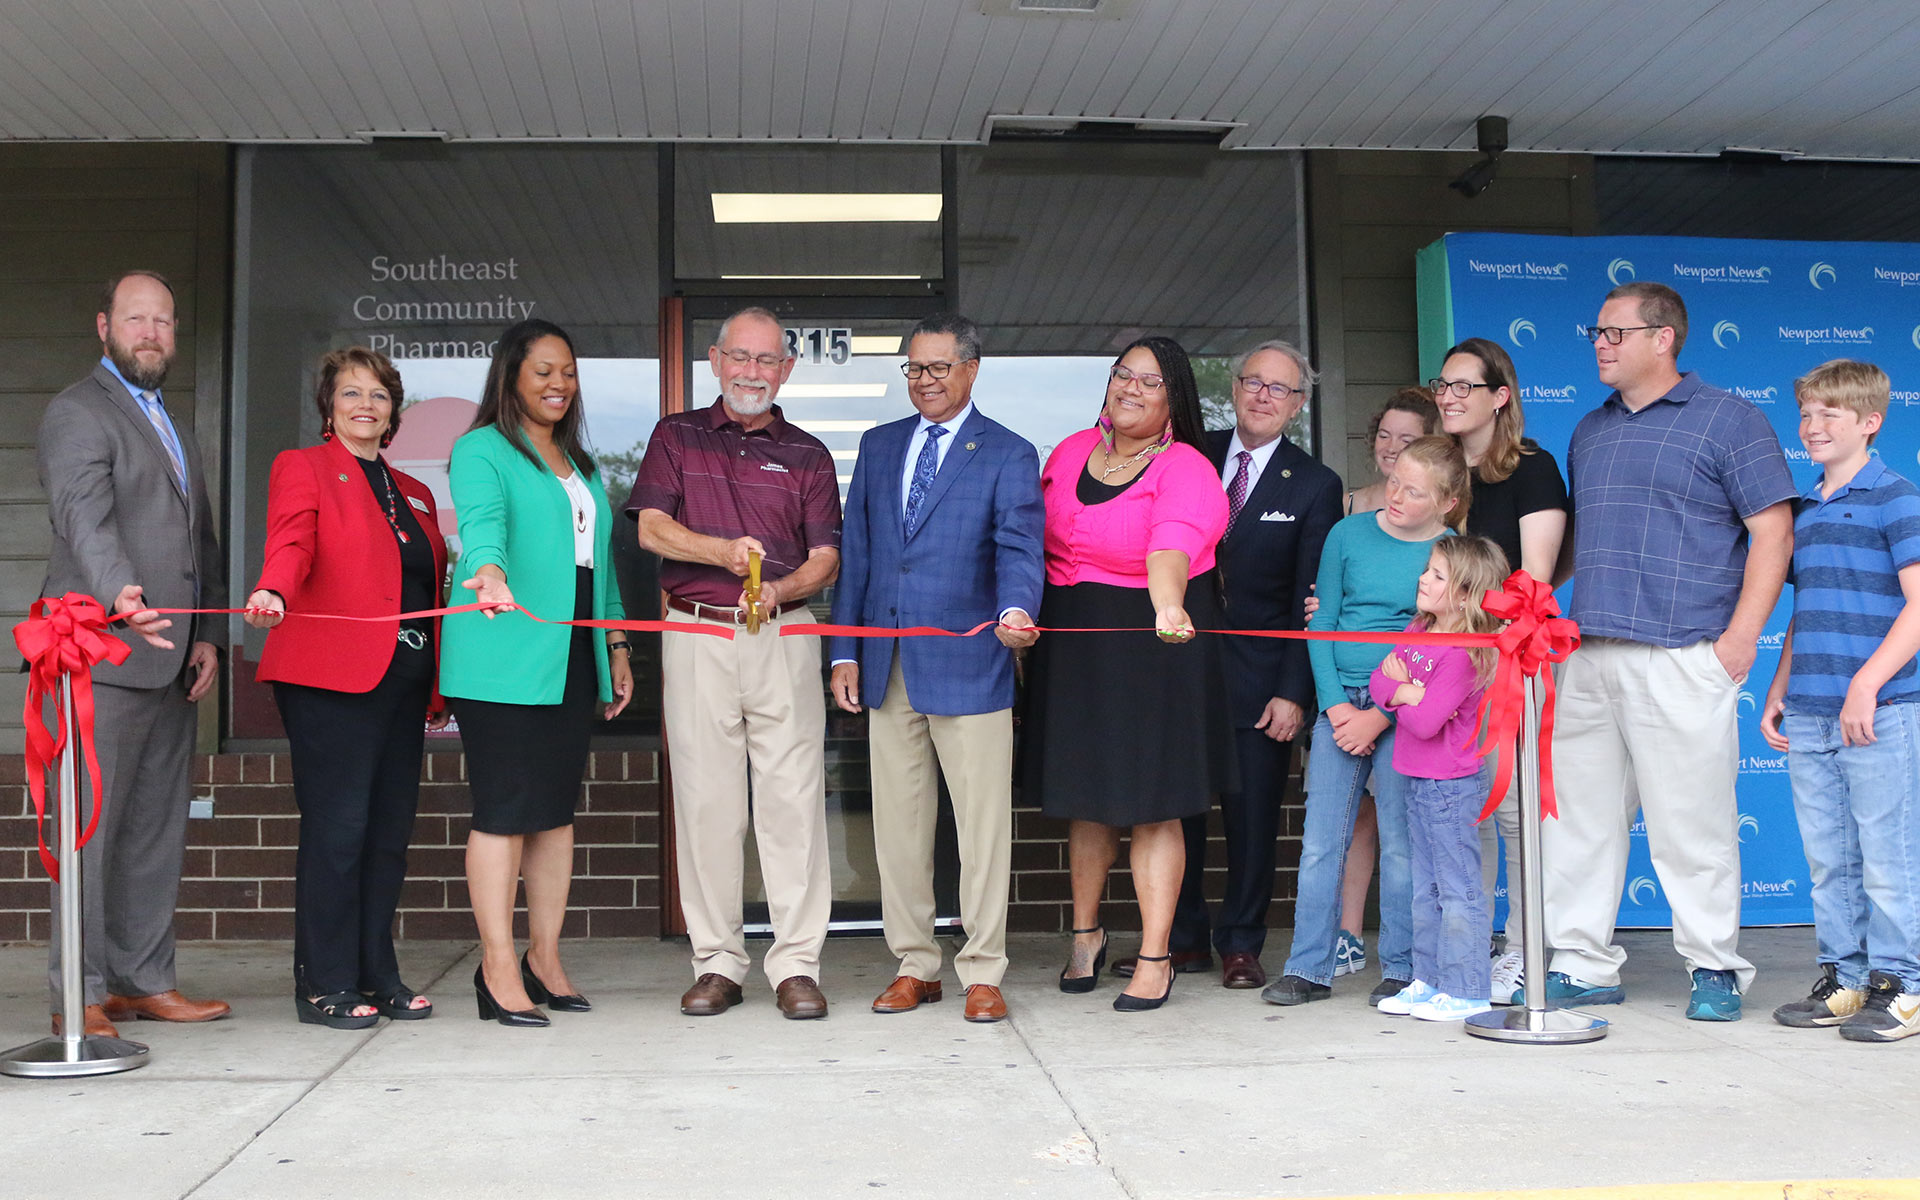 Southeast Community Pharmacy Ribbon Cutting - Newport News